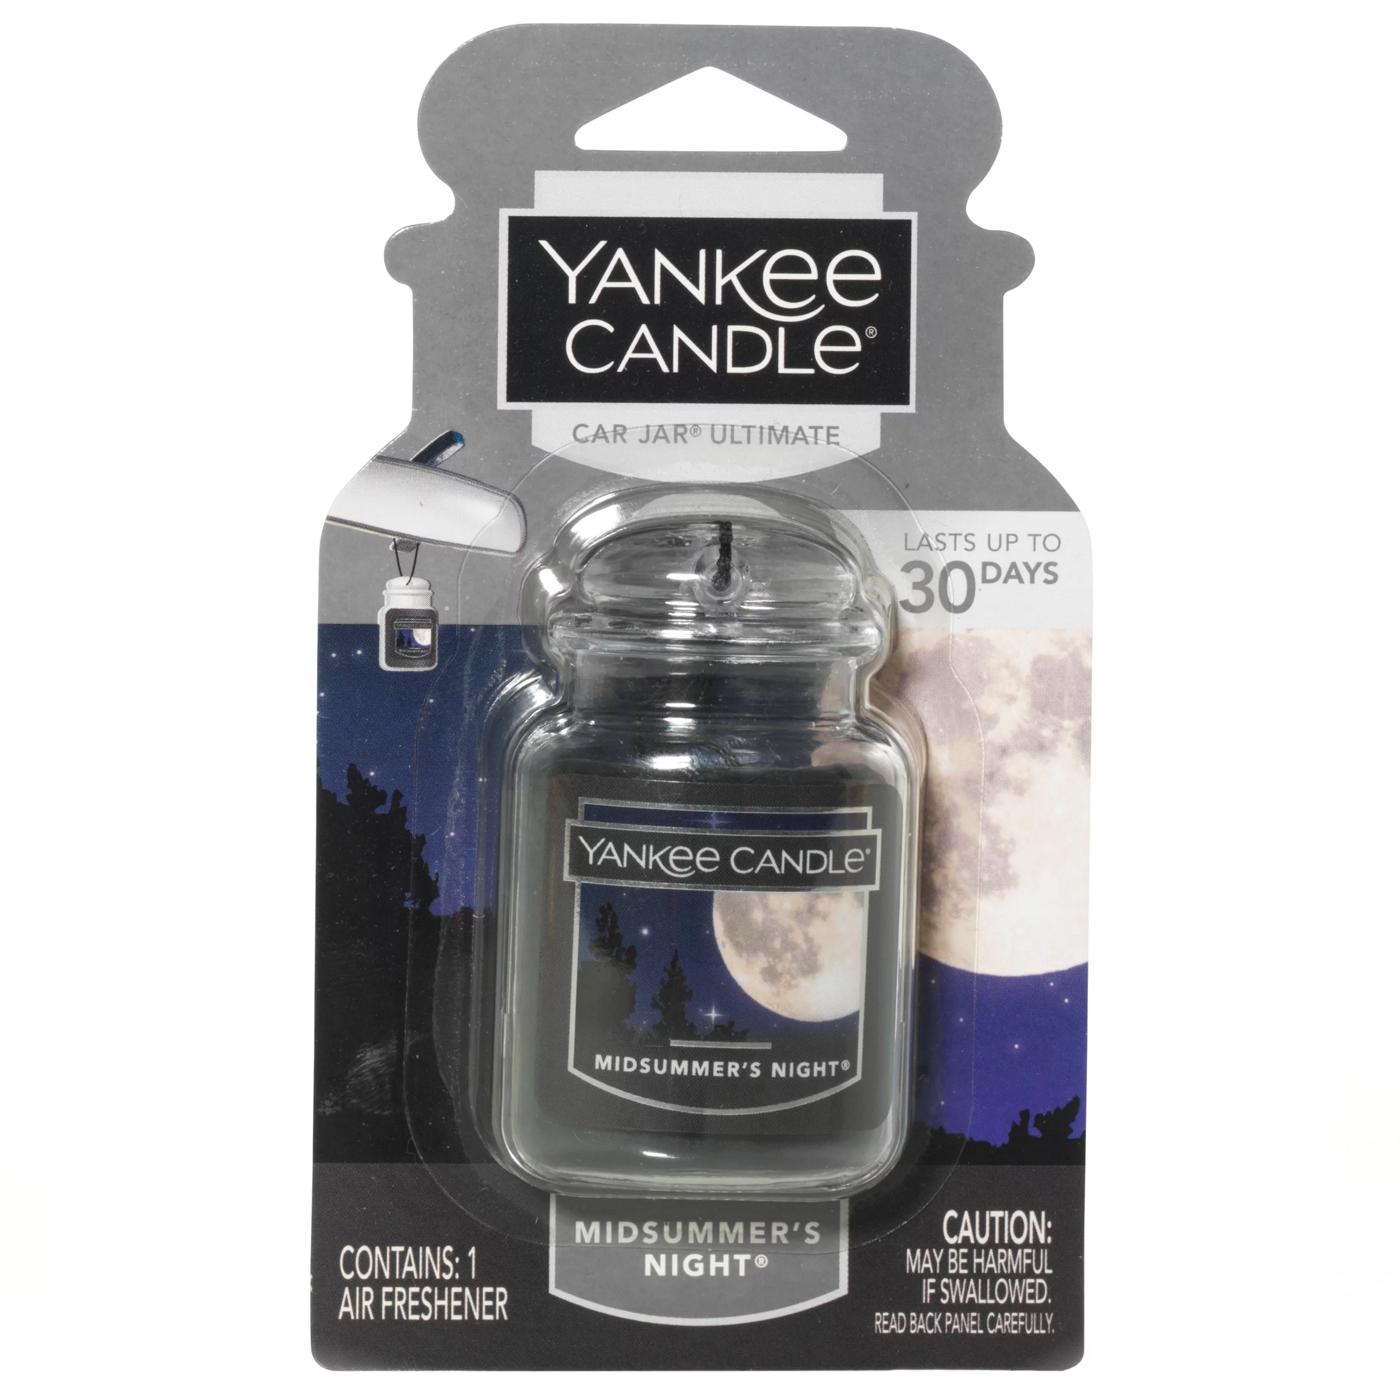 Yankee Candle Car Jar Ultimate - Midsummer's Night; image 1 of 2